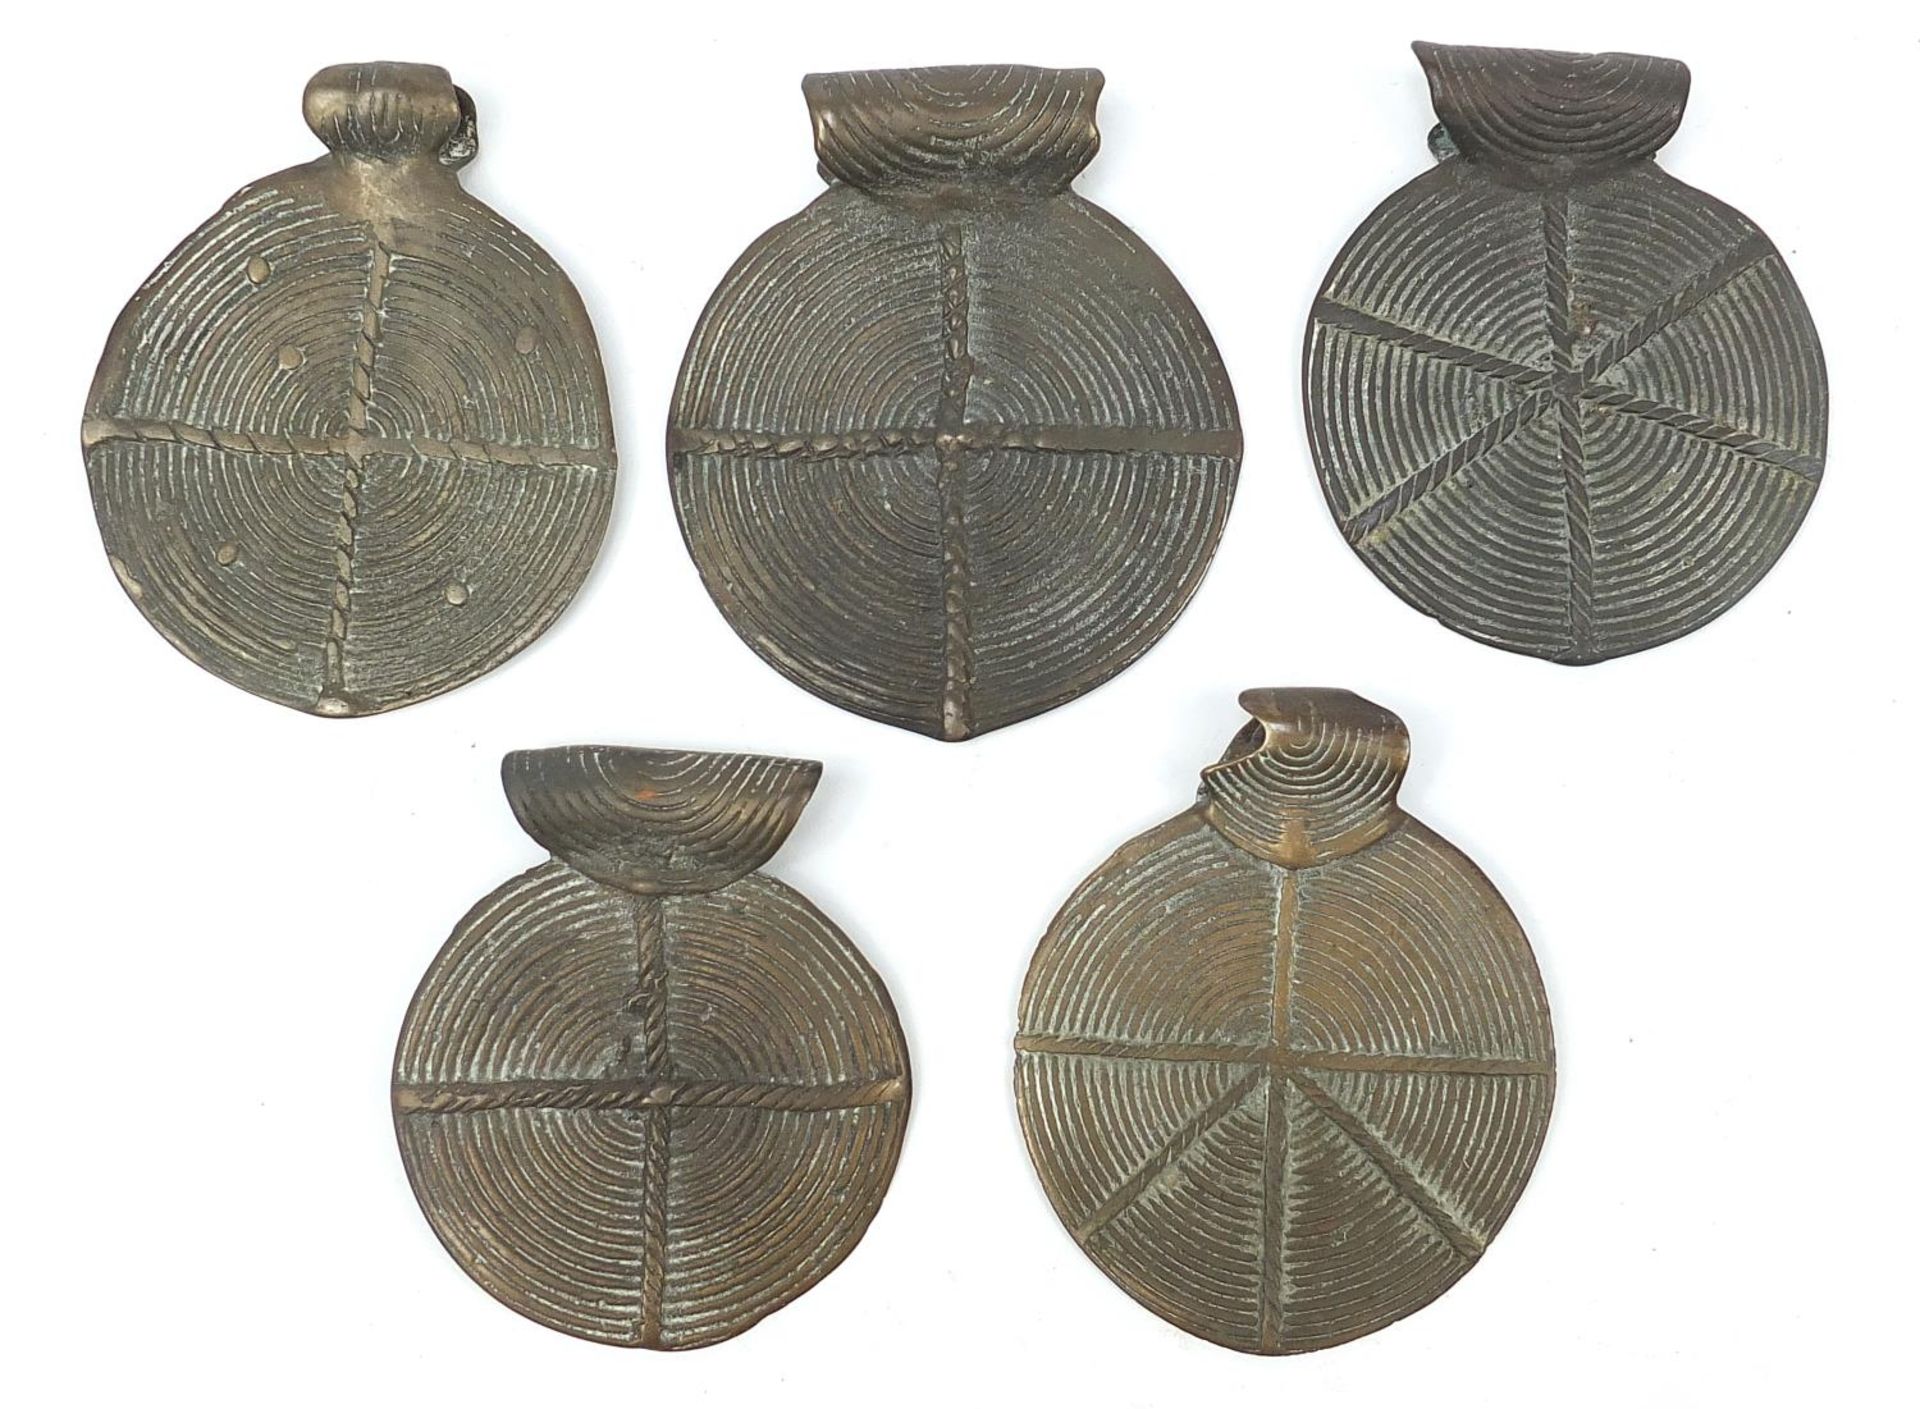 Five African Benin style bronze talismans, the largest 11cm high